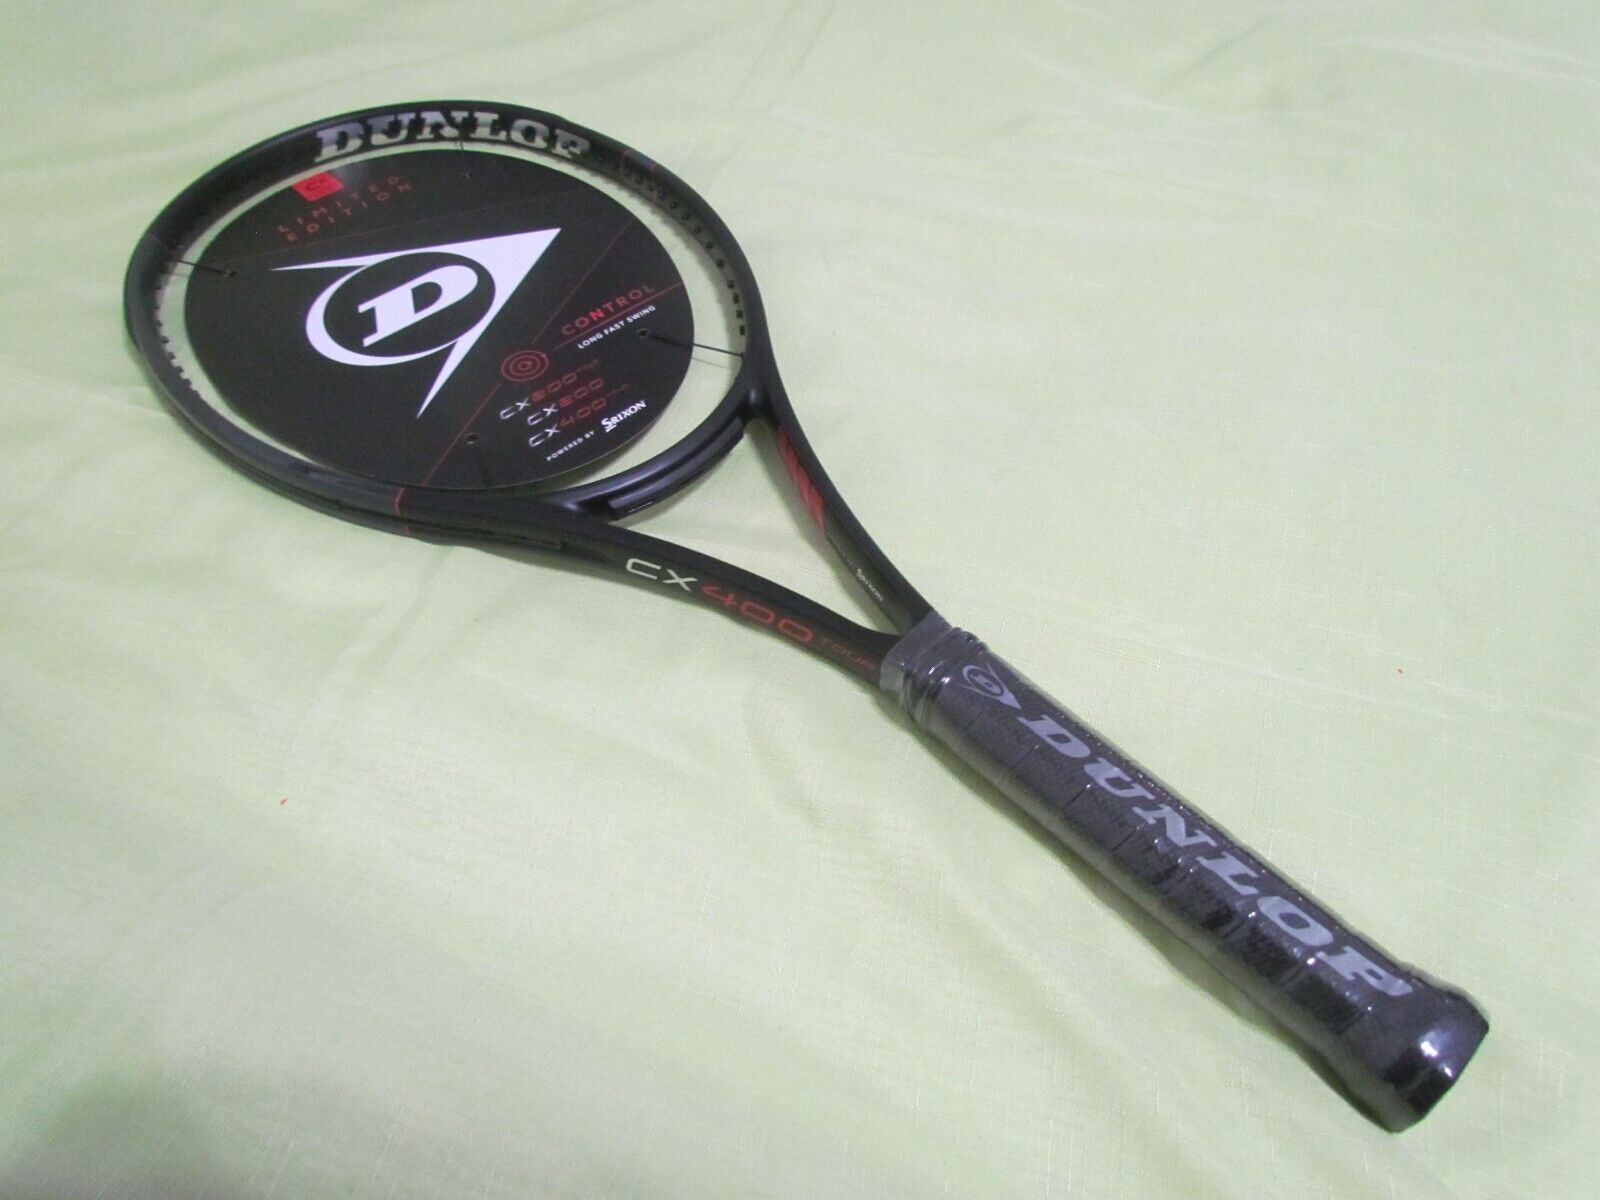 New Dunlop CX 400 Tour Limited Edition 4 3/8 (3) Grip Tennis Racquet